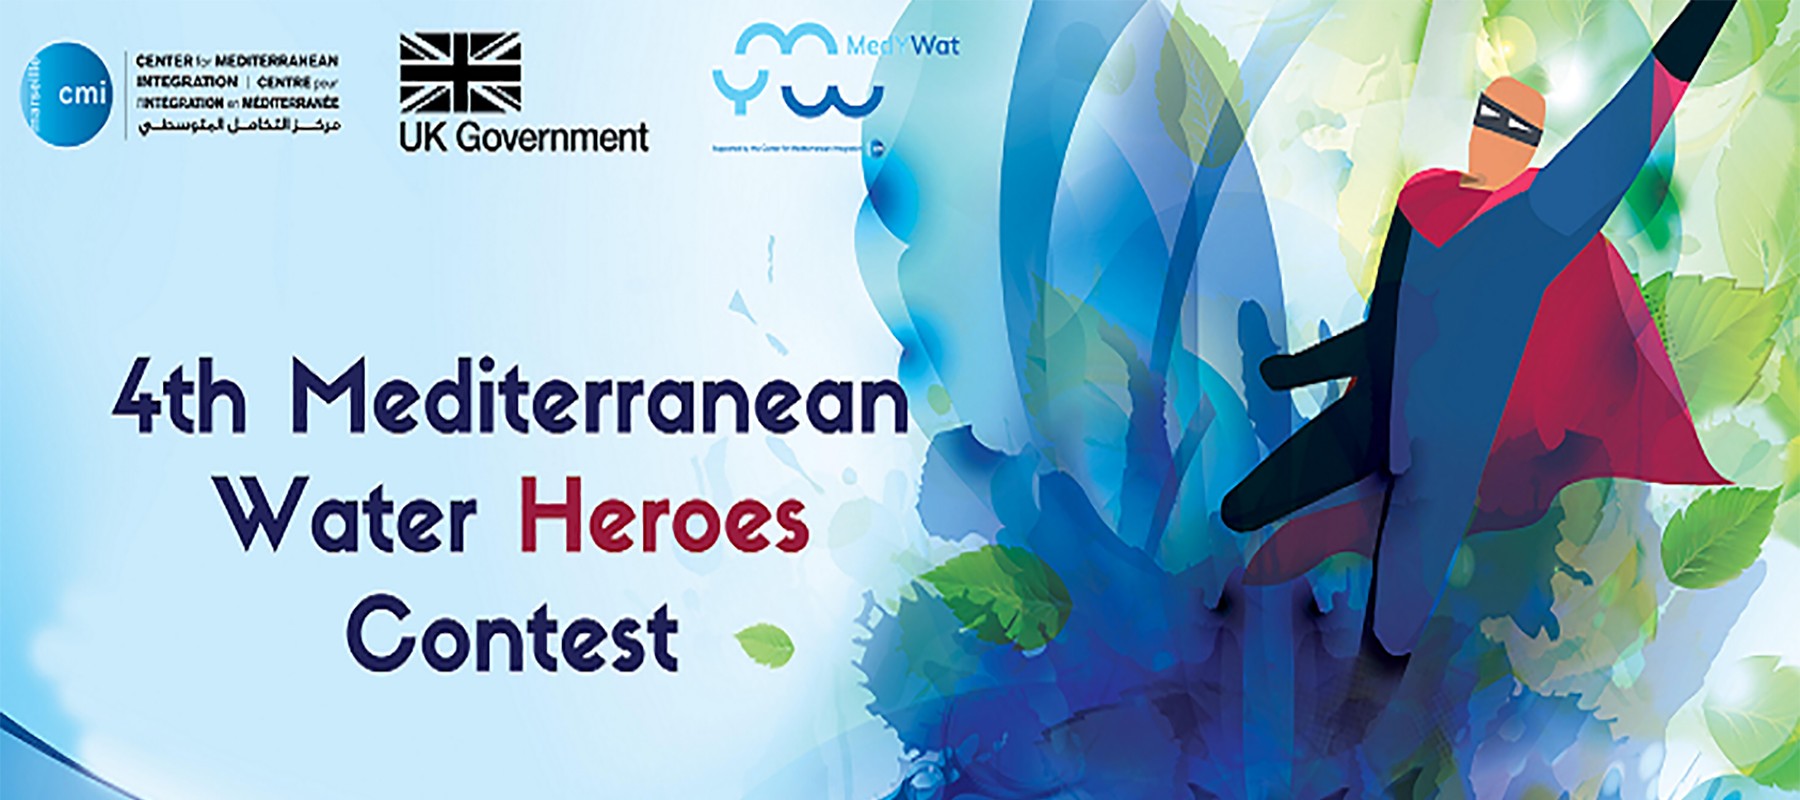 4th Mediterranean Water Heroes Contest Banner